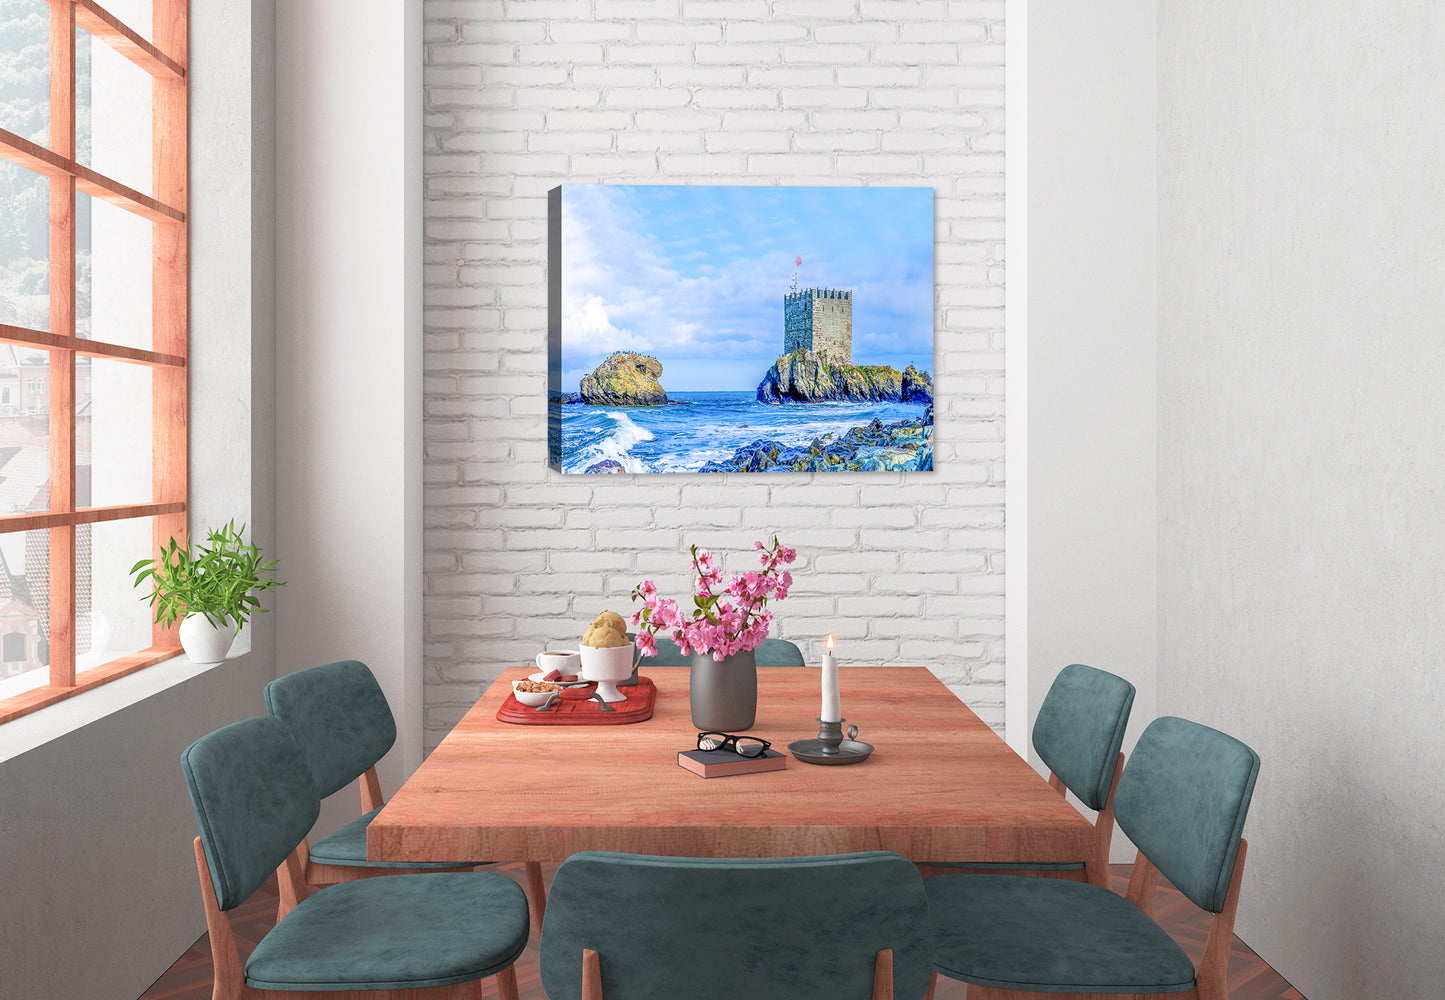 Castle on the Sea Shore - Canvas Art Print